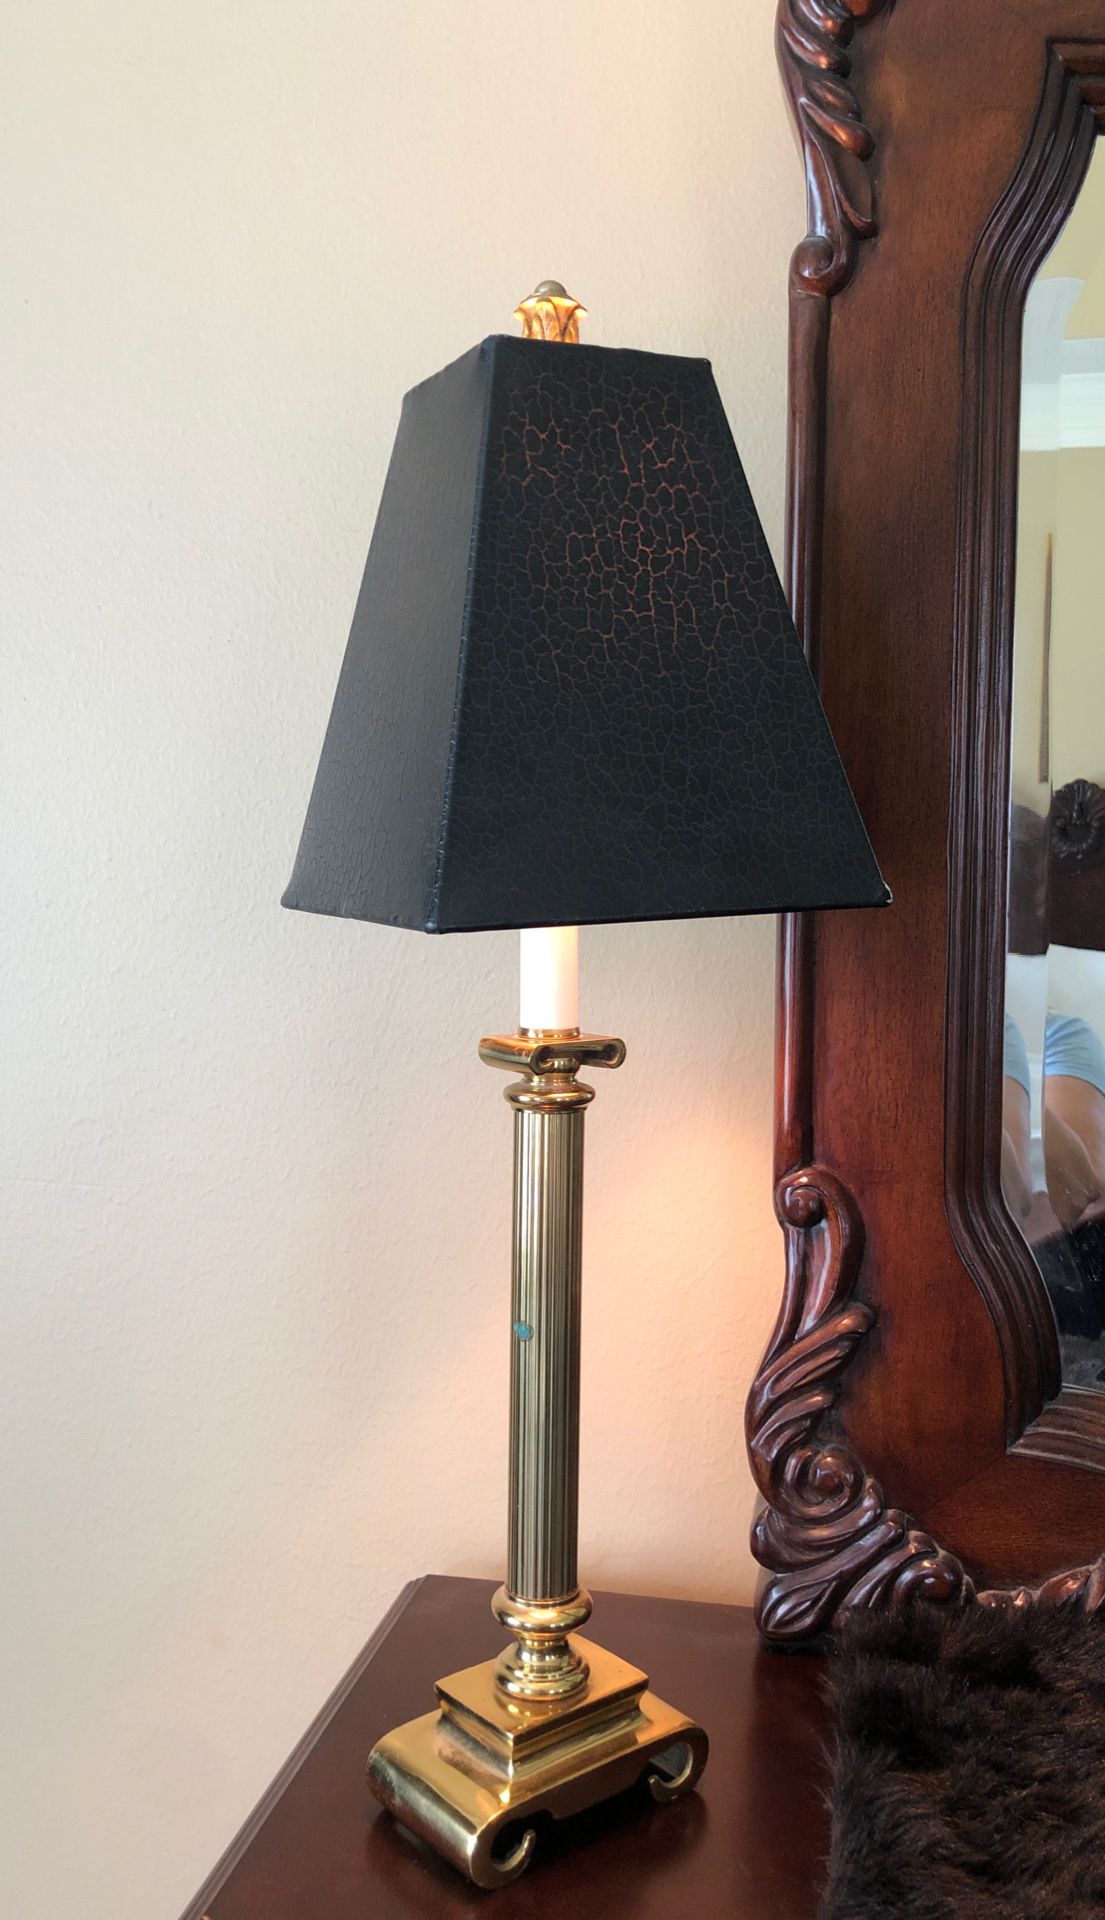 Beautiful black cheetah lamp shades on sharp gold clean vase